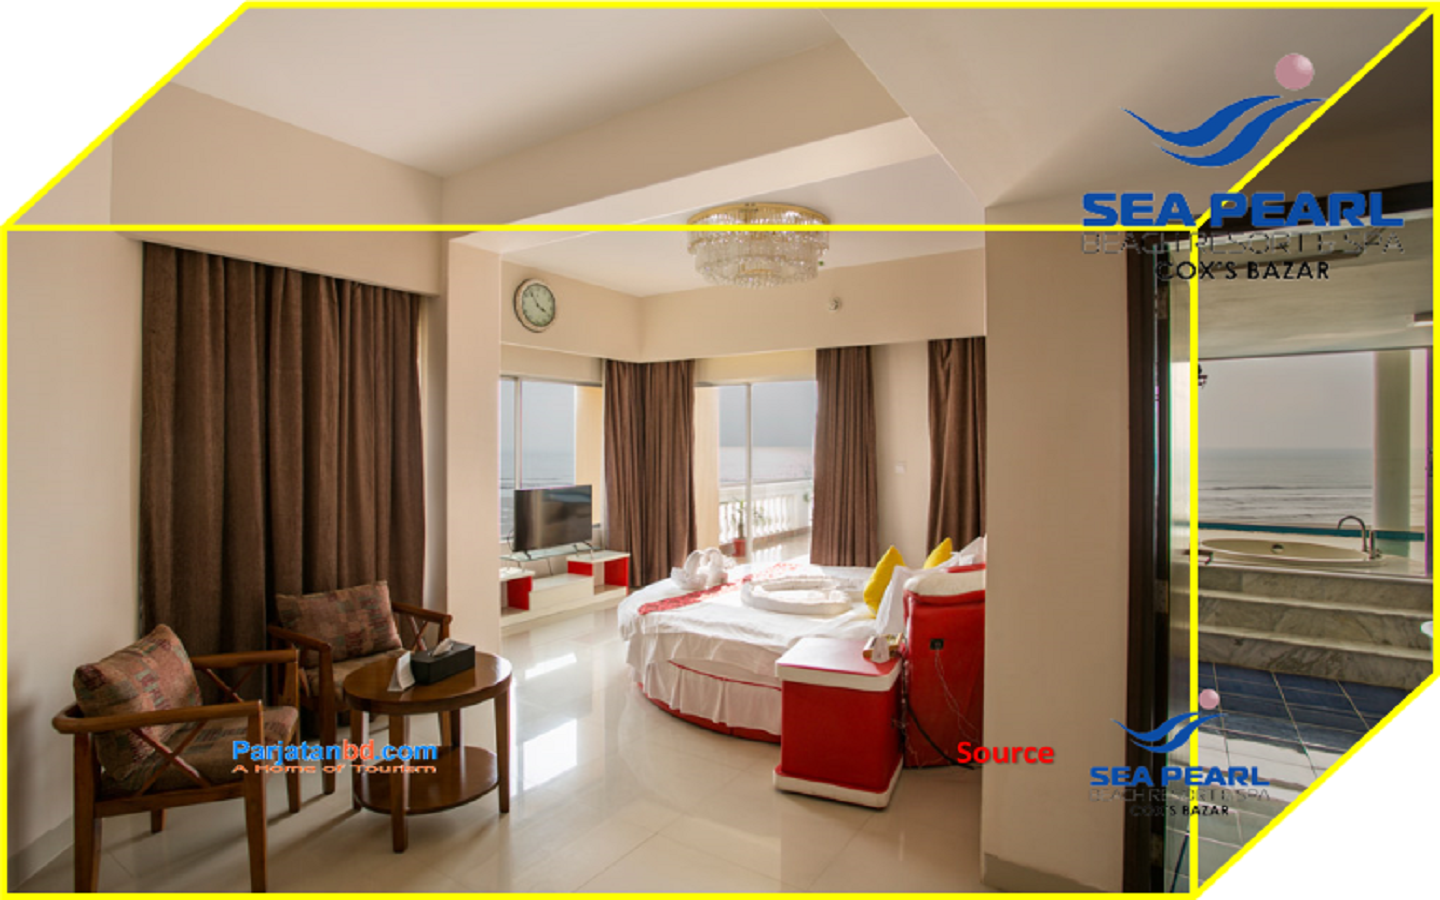 Room Royal Paradise Suite -1, Hotel Sea Pearl